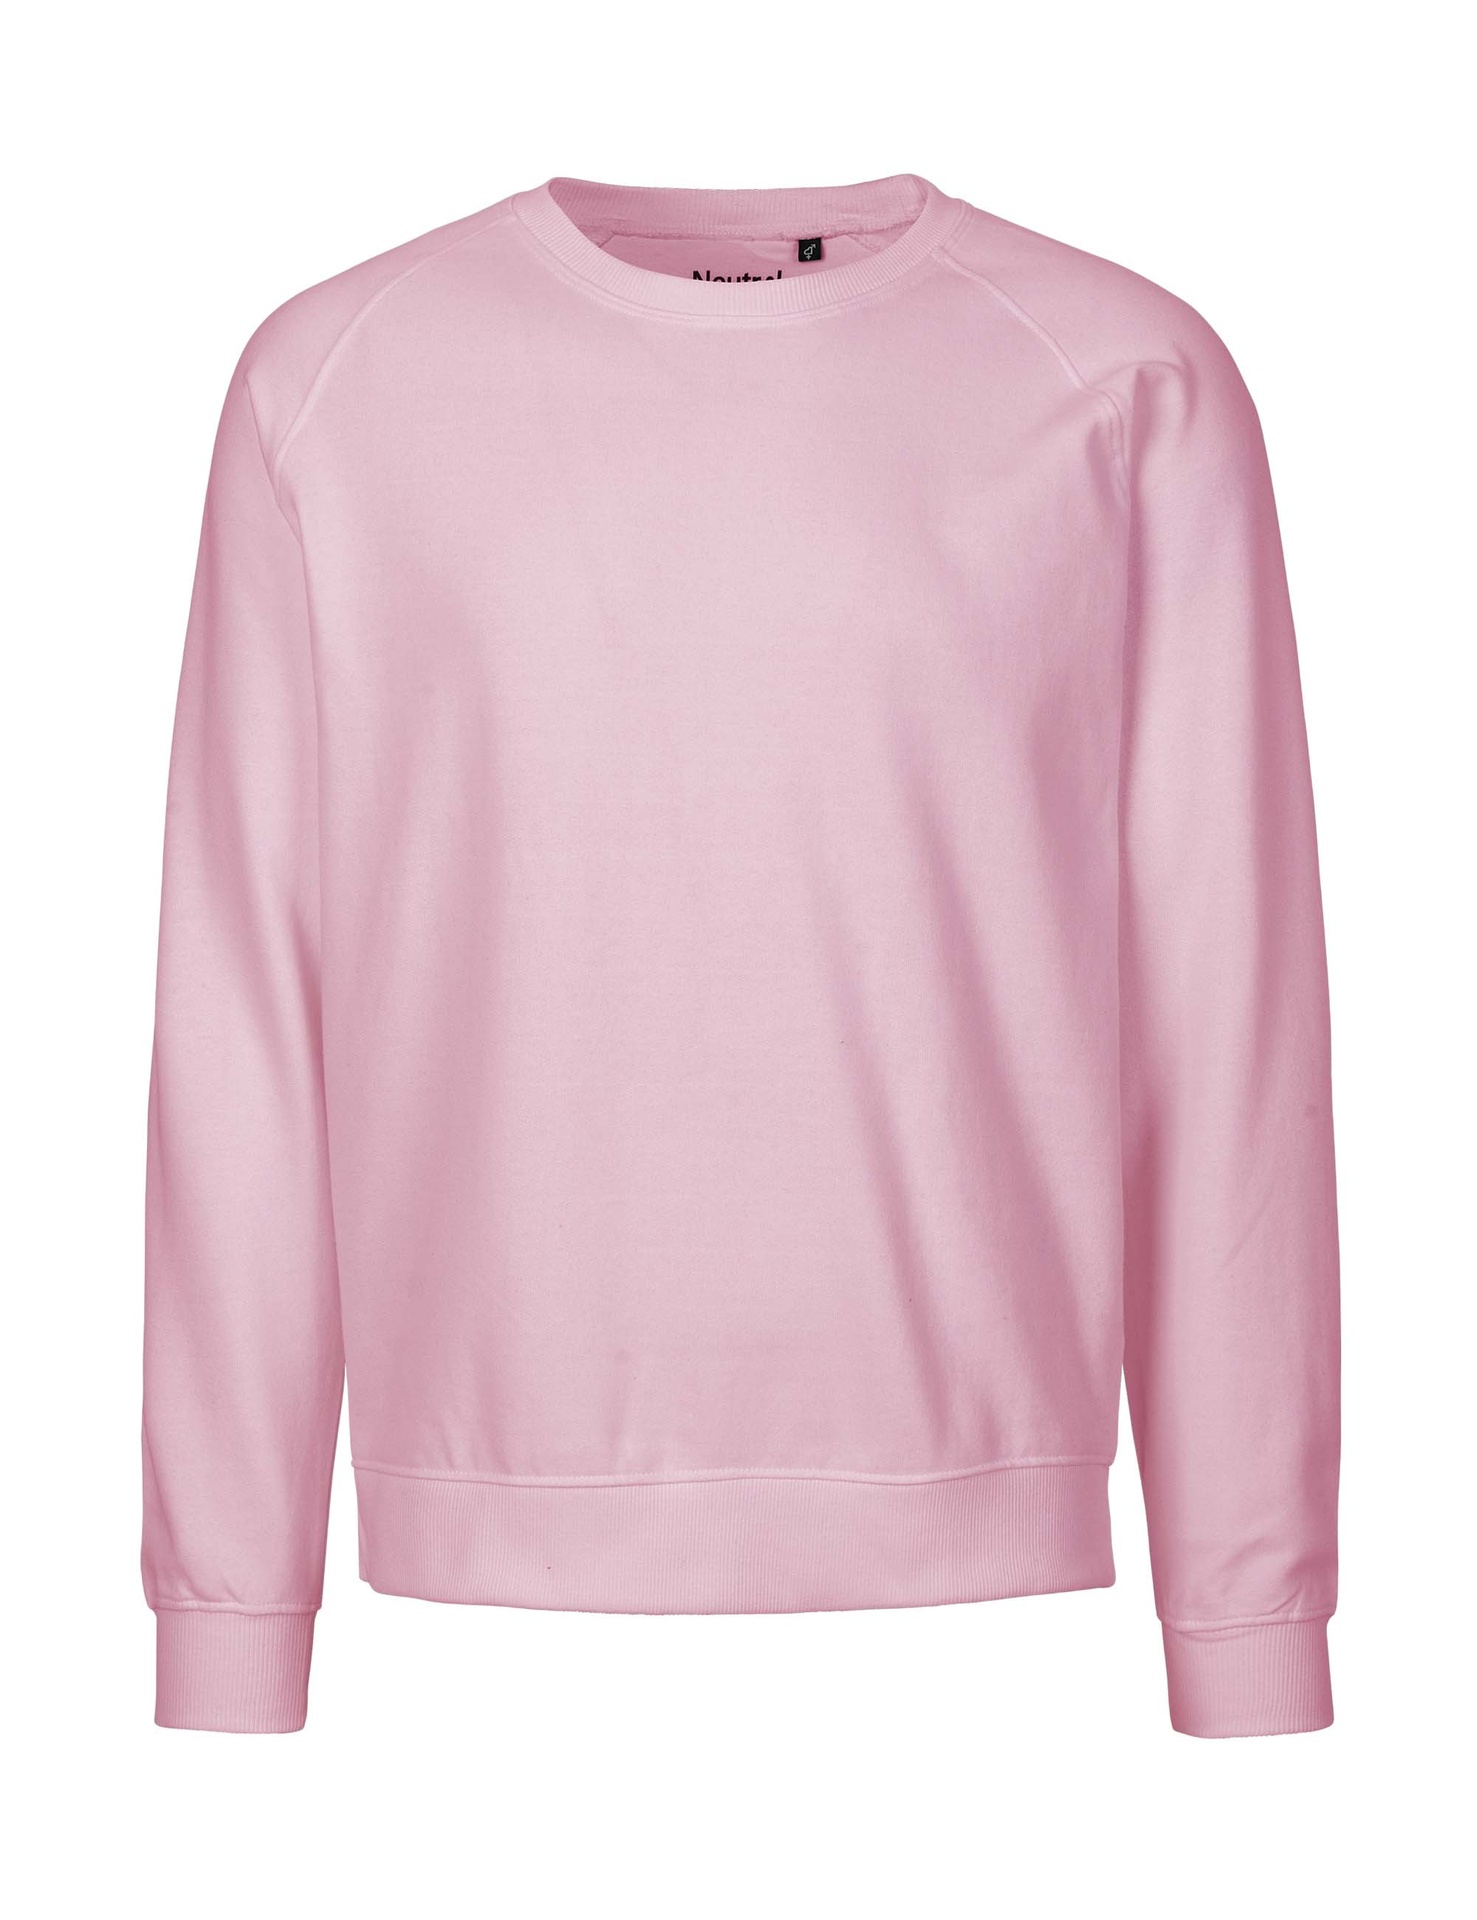 [PR/02736] Unisex Sweatshirt (Light Pink 20, L)